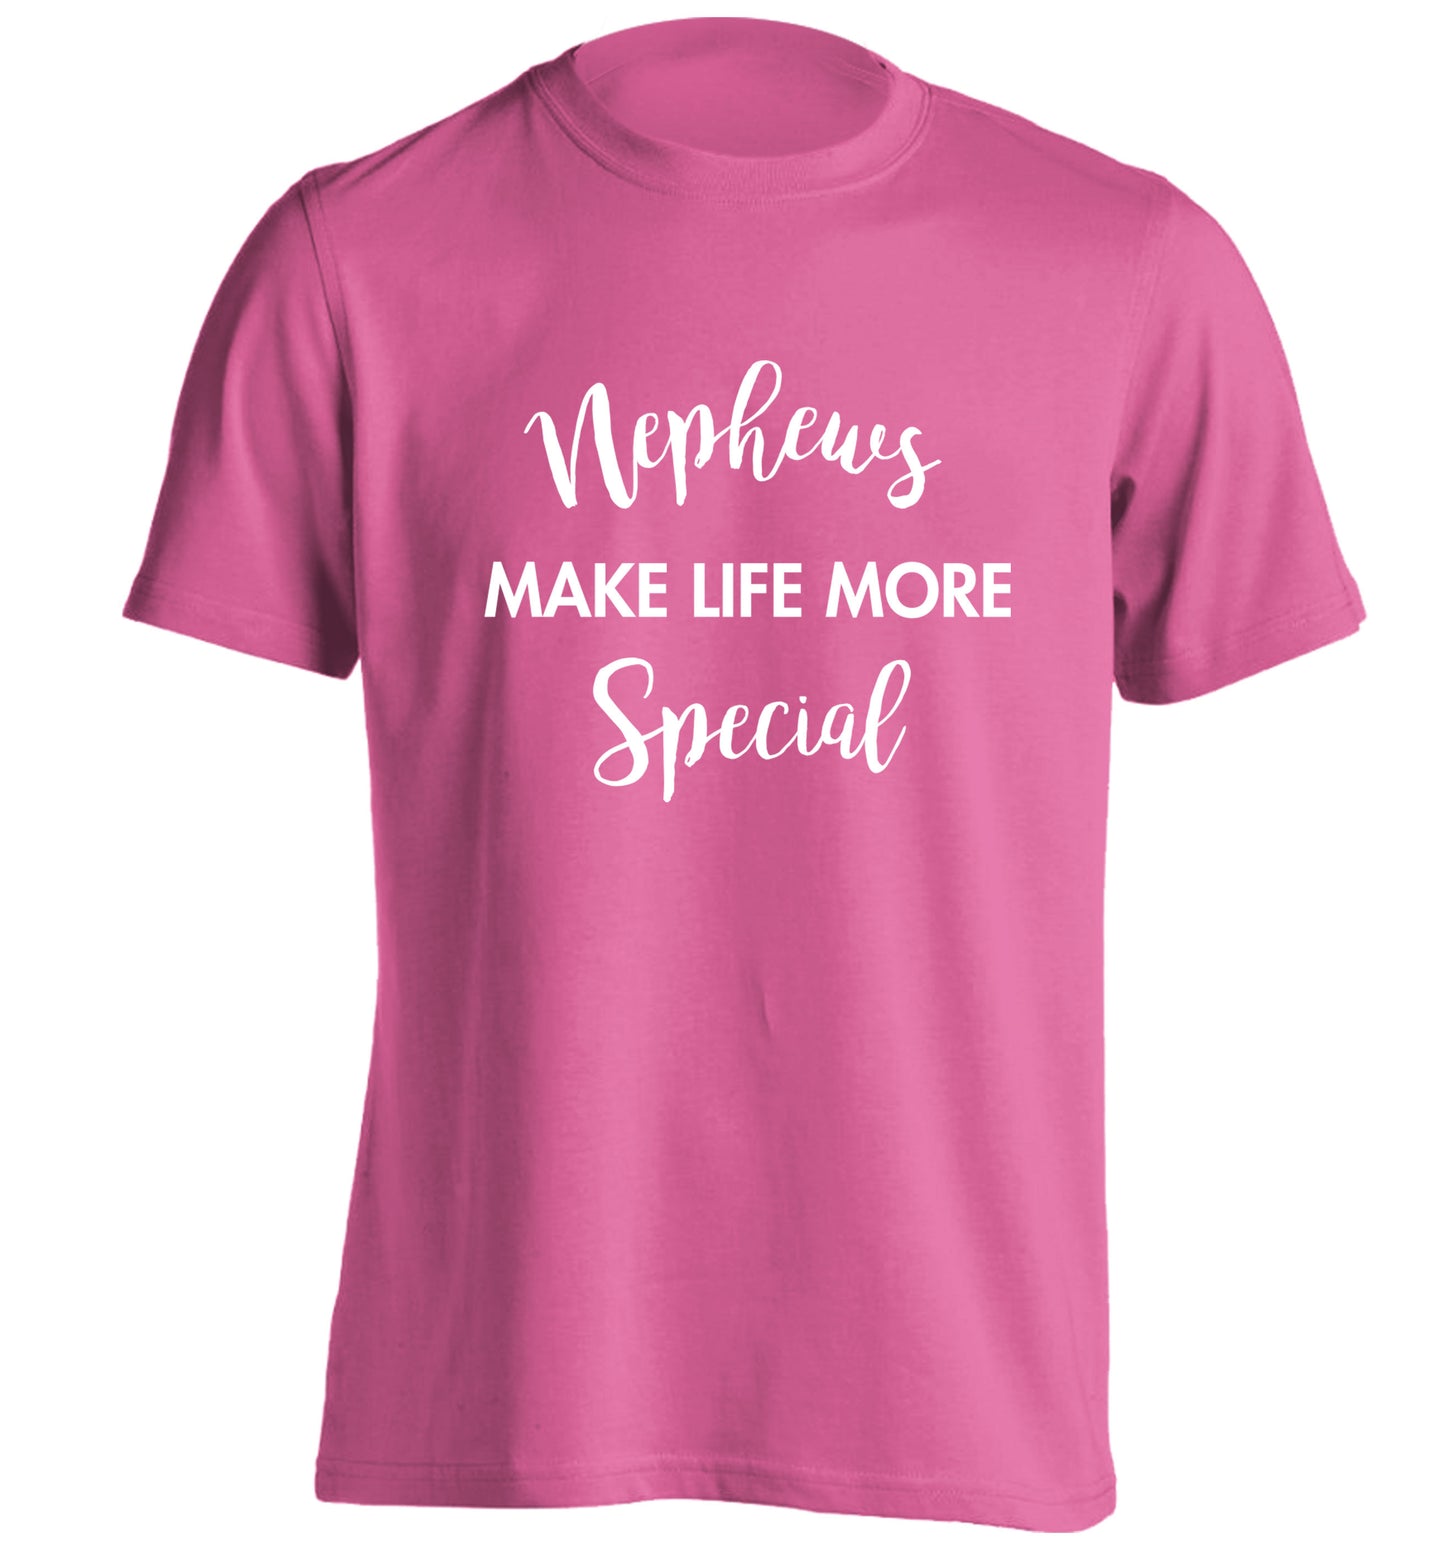 Nephews make life more special adults unisex pink Tshirt 2XL